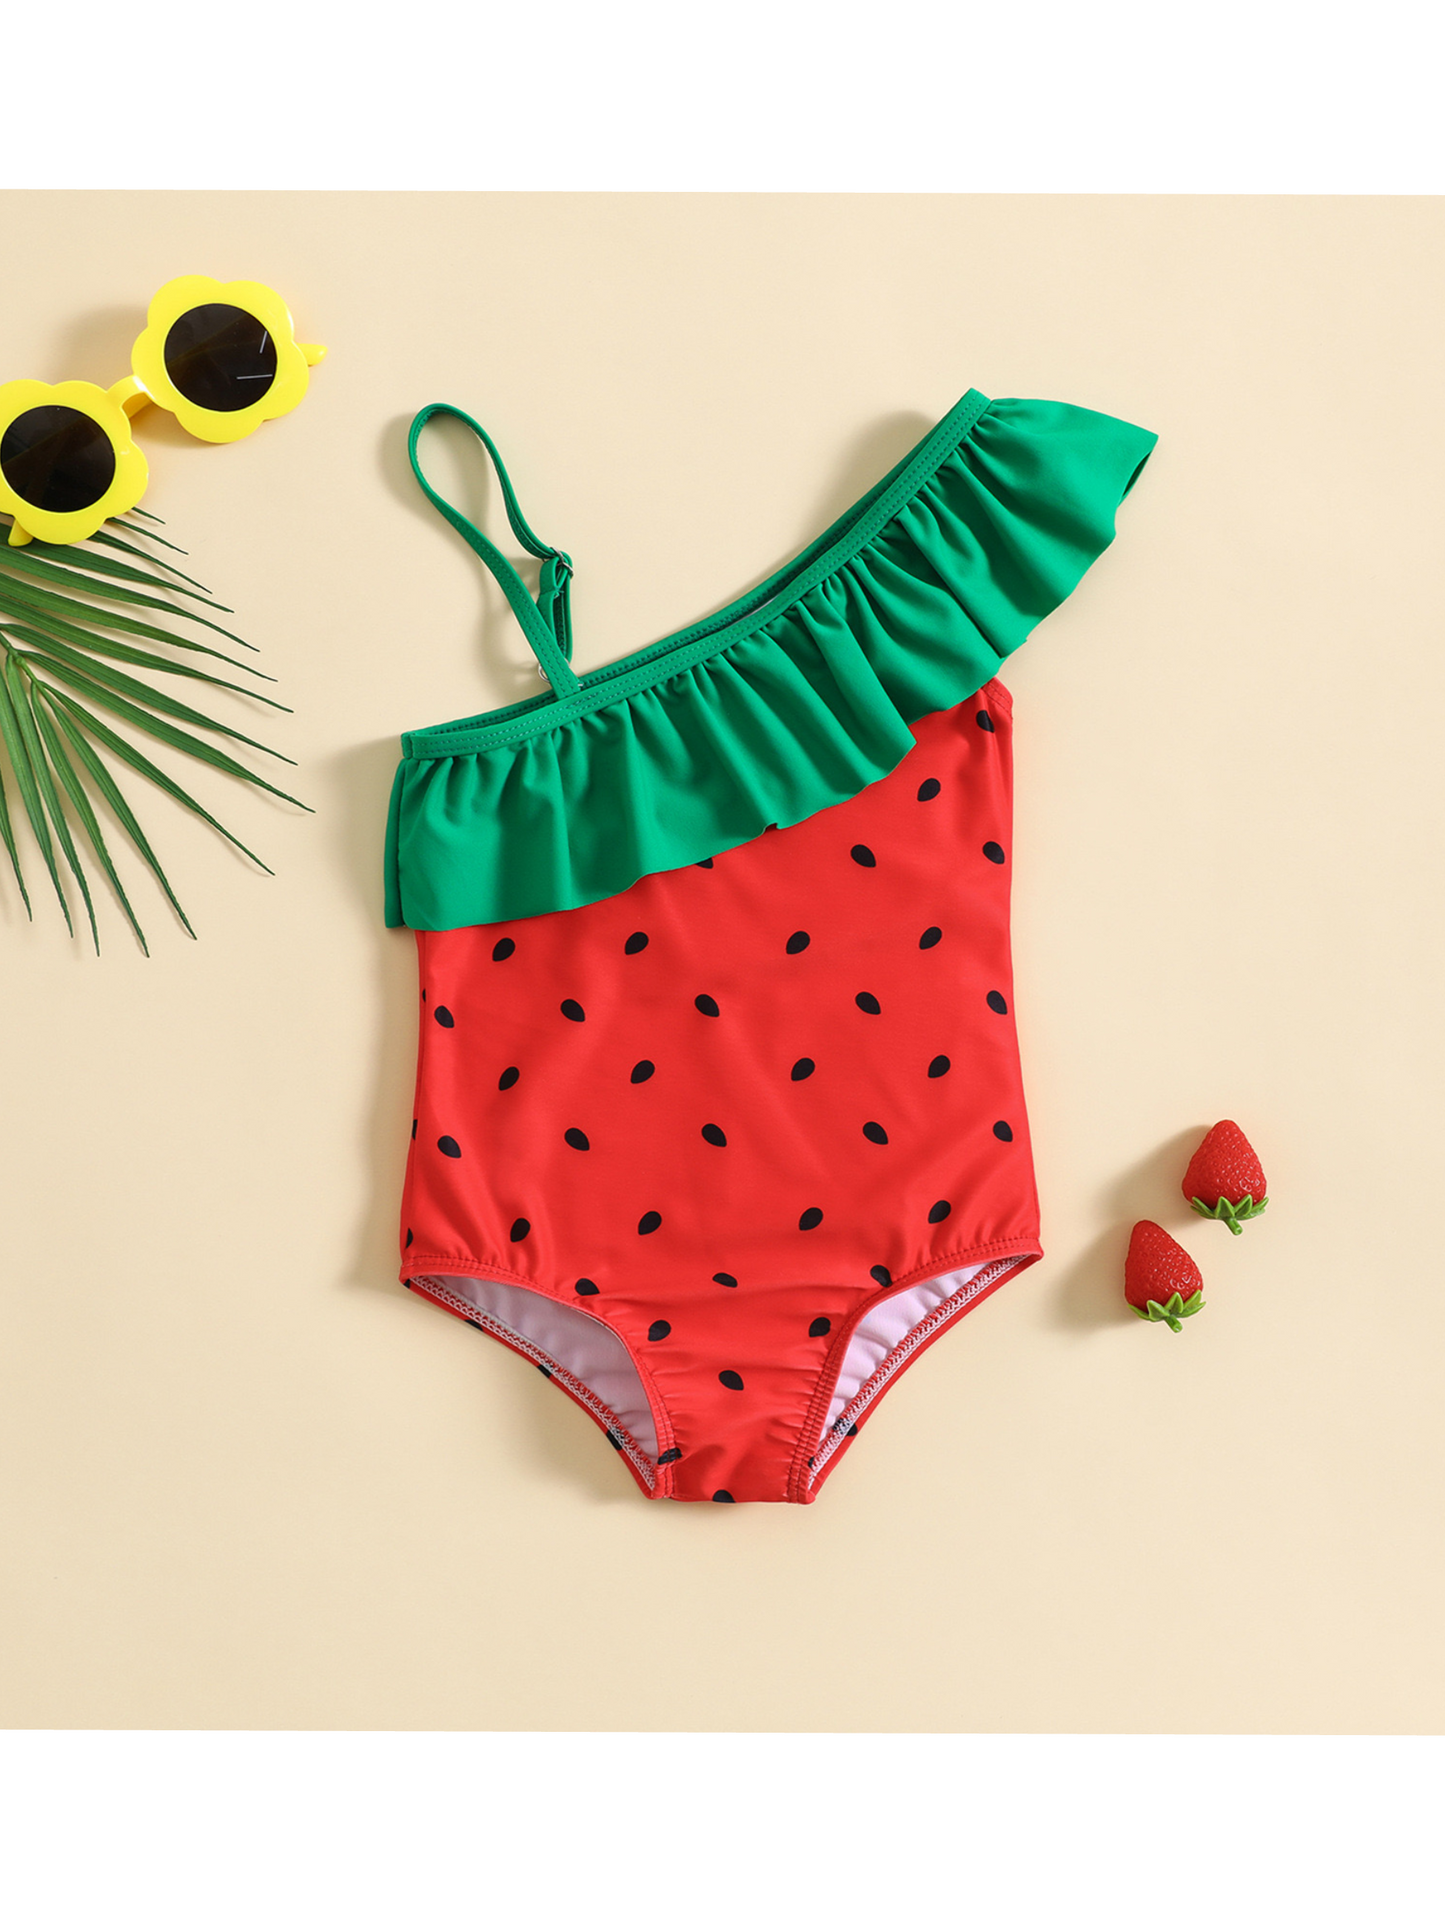 Watermelon print kids swimsuit